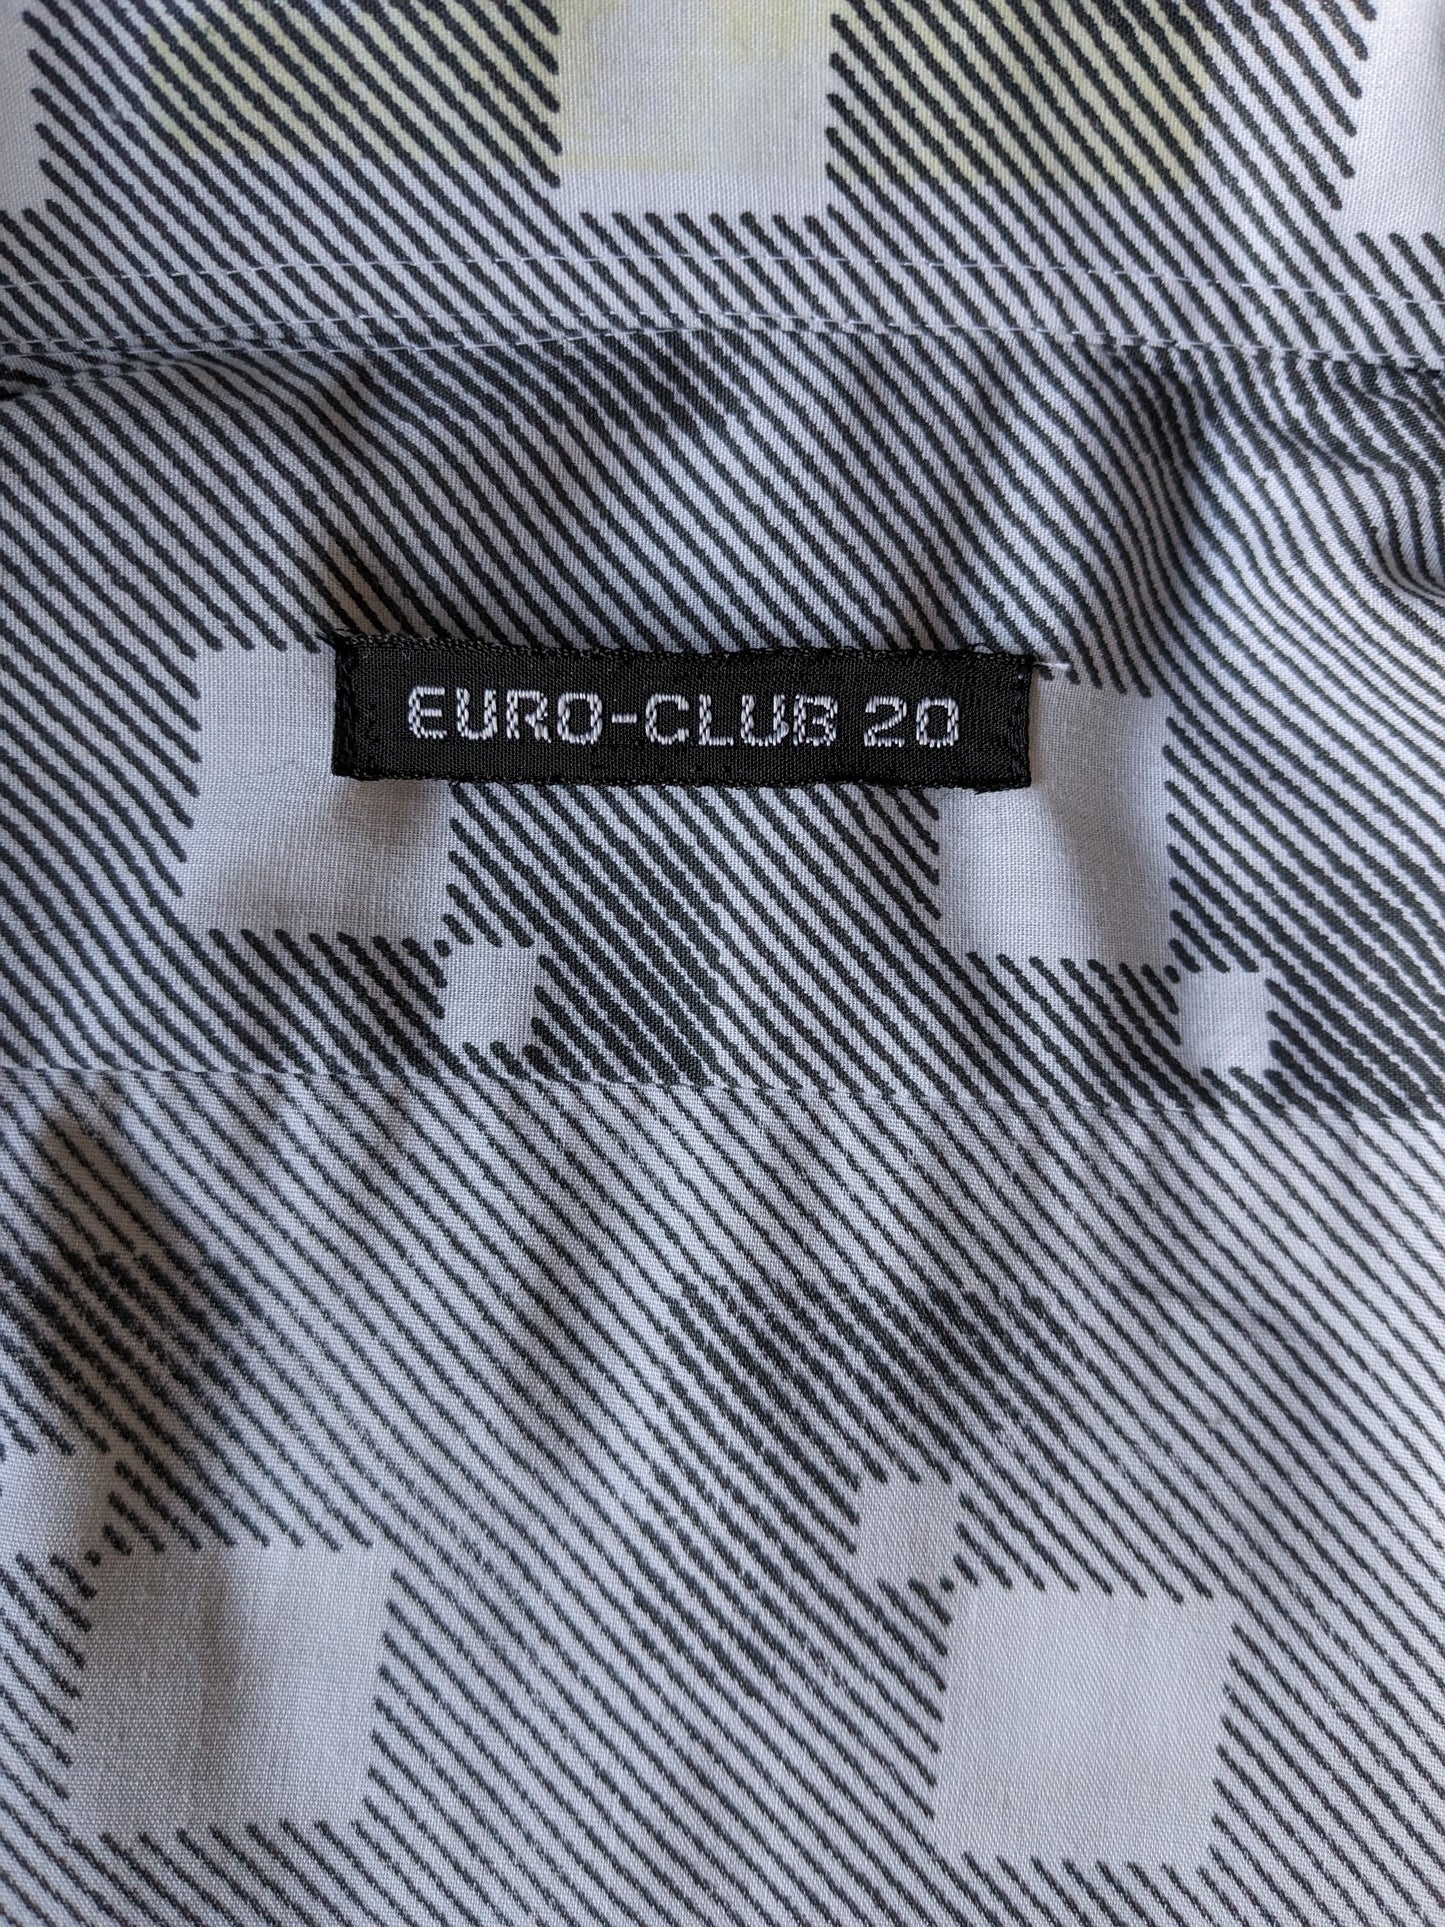 Vintage Euro-Club-20 70's shirt with point collar. White gray print. Size M.